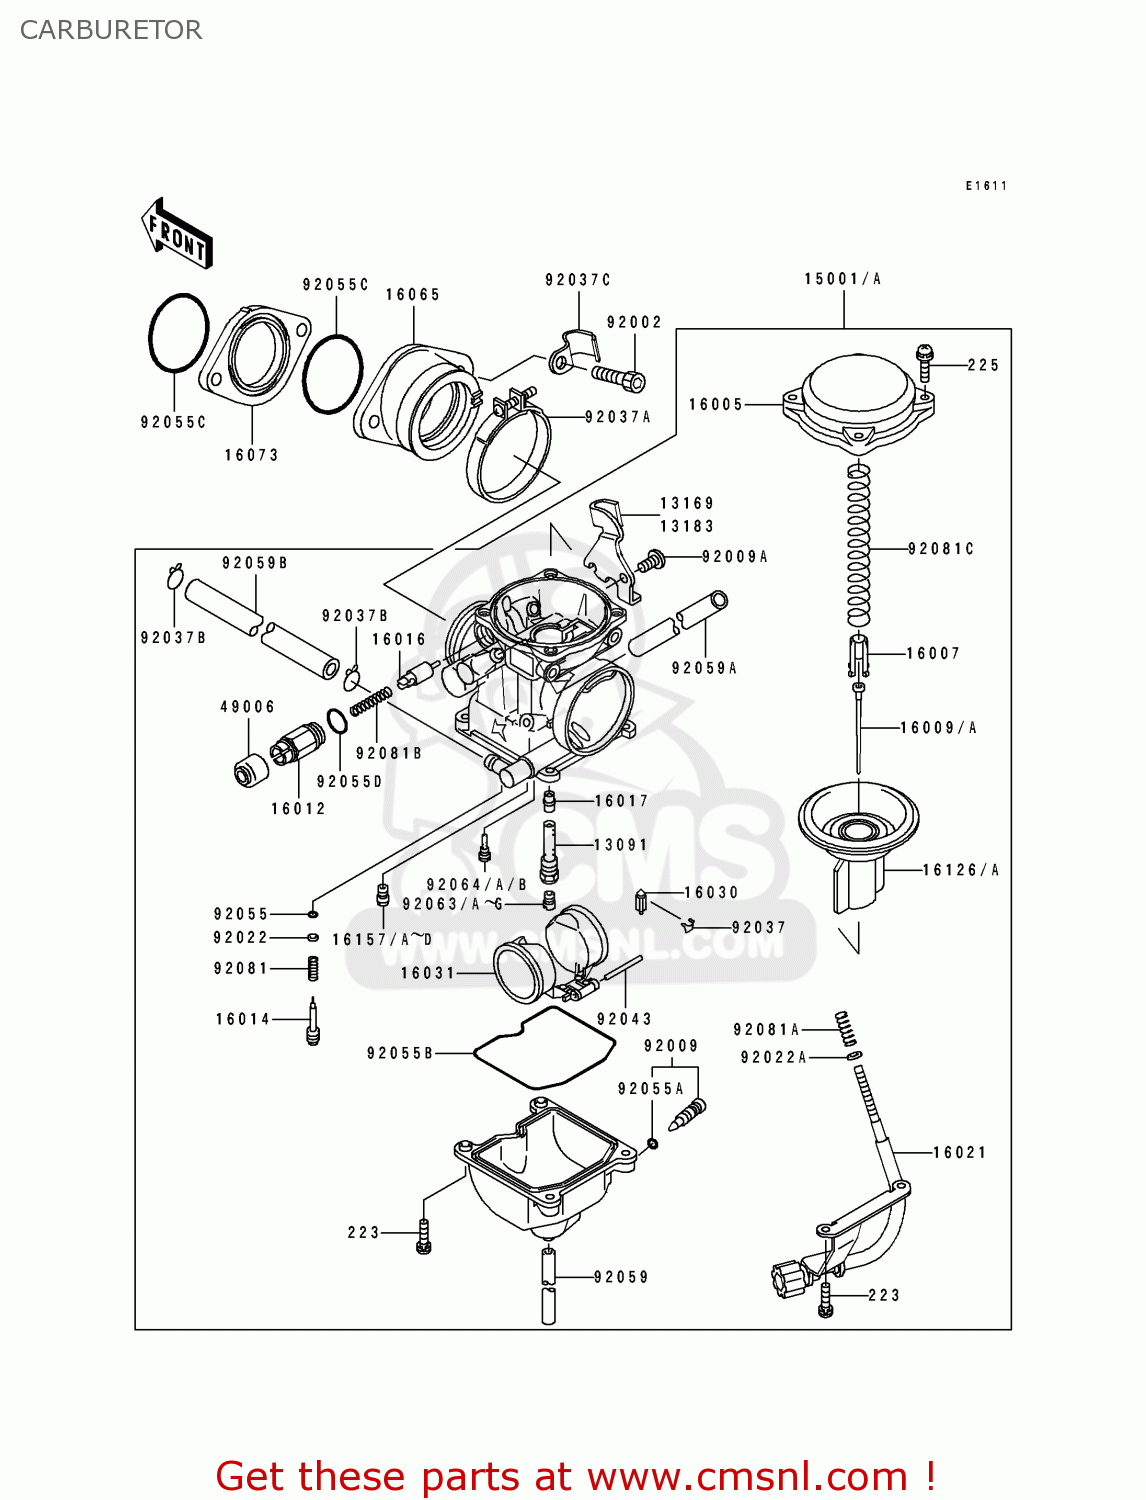 kfx 400 carburetor diagram